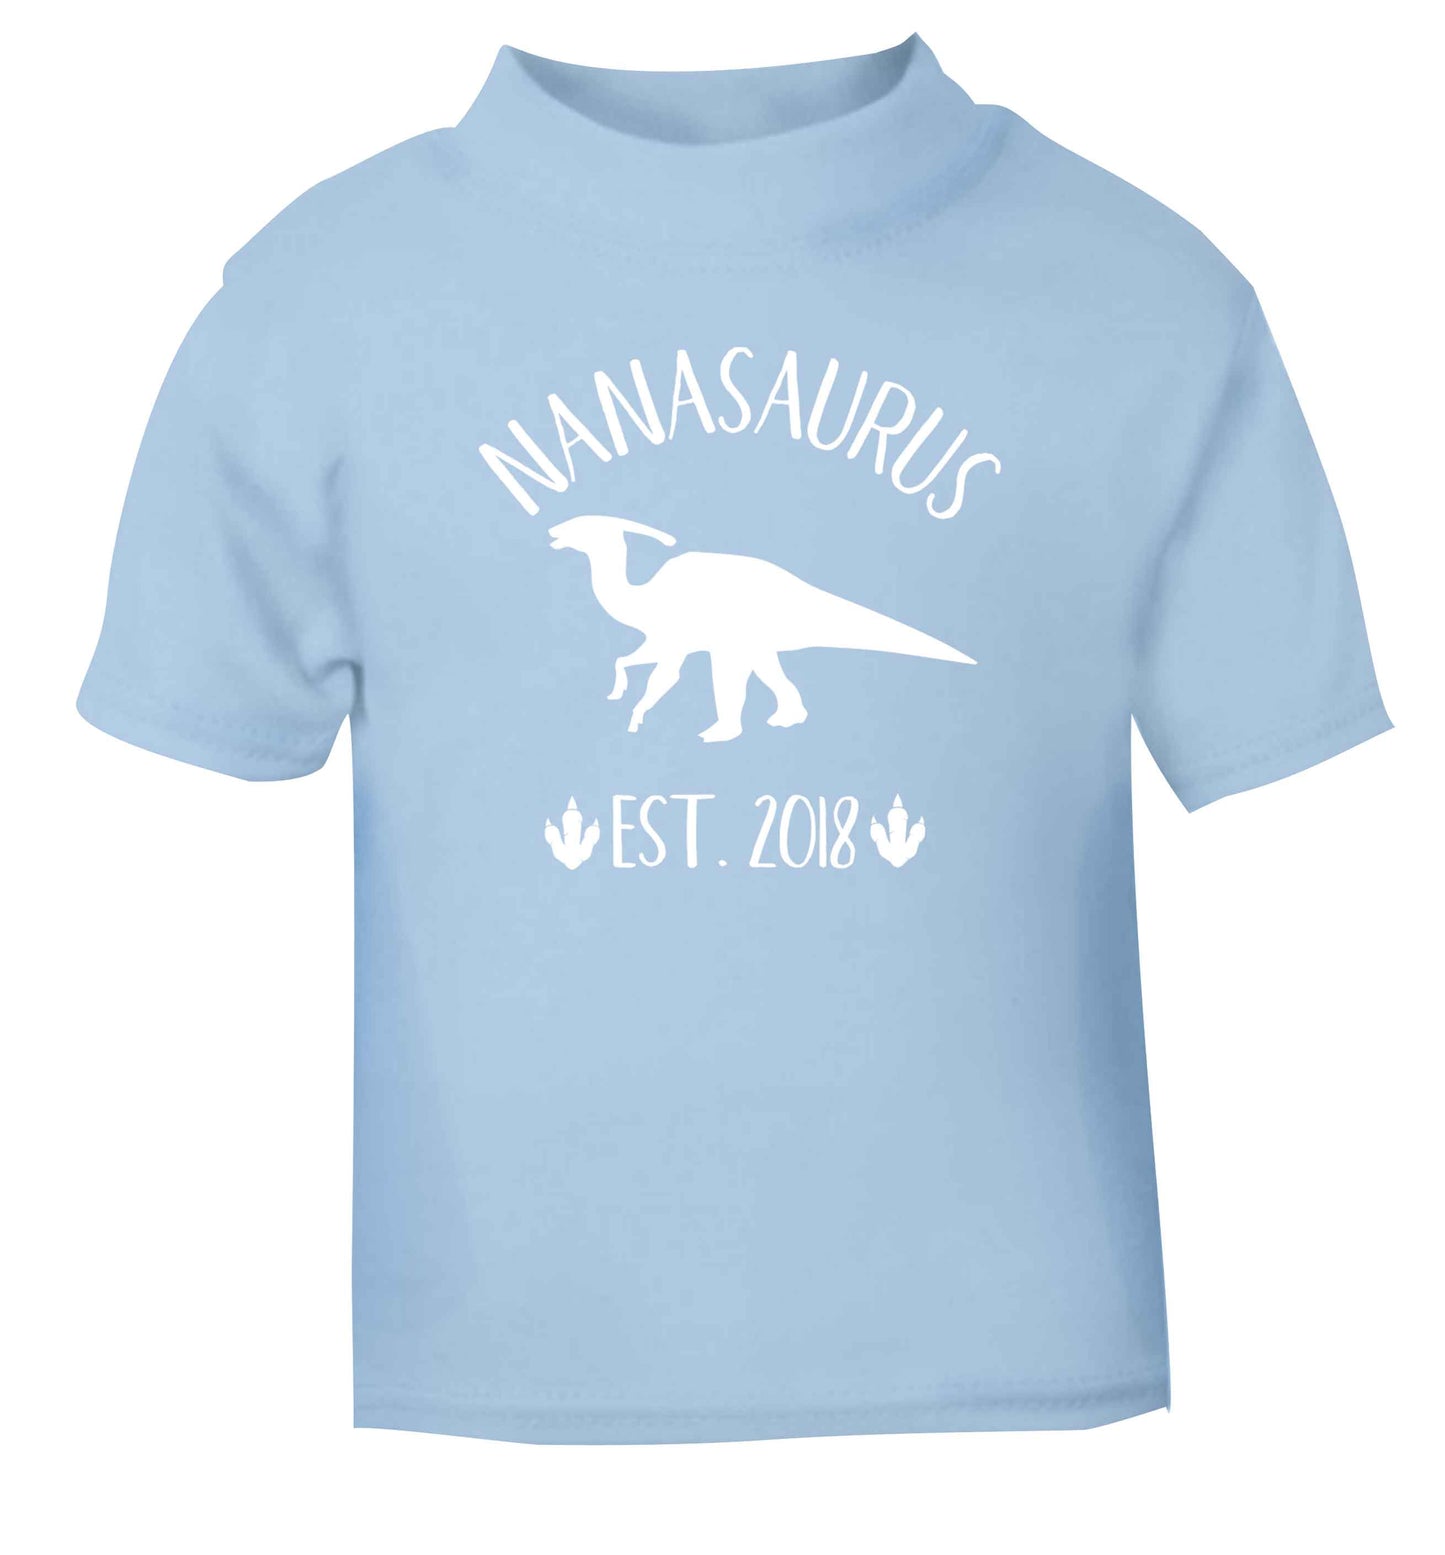 Personalised nanasaurus since (custom date) light blue Baby Toddler Tshirt 2 Years